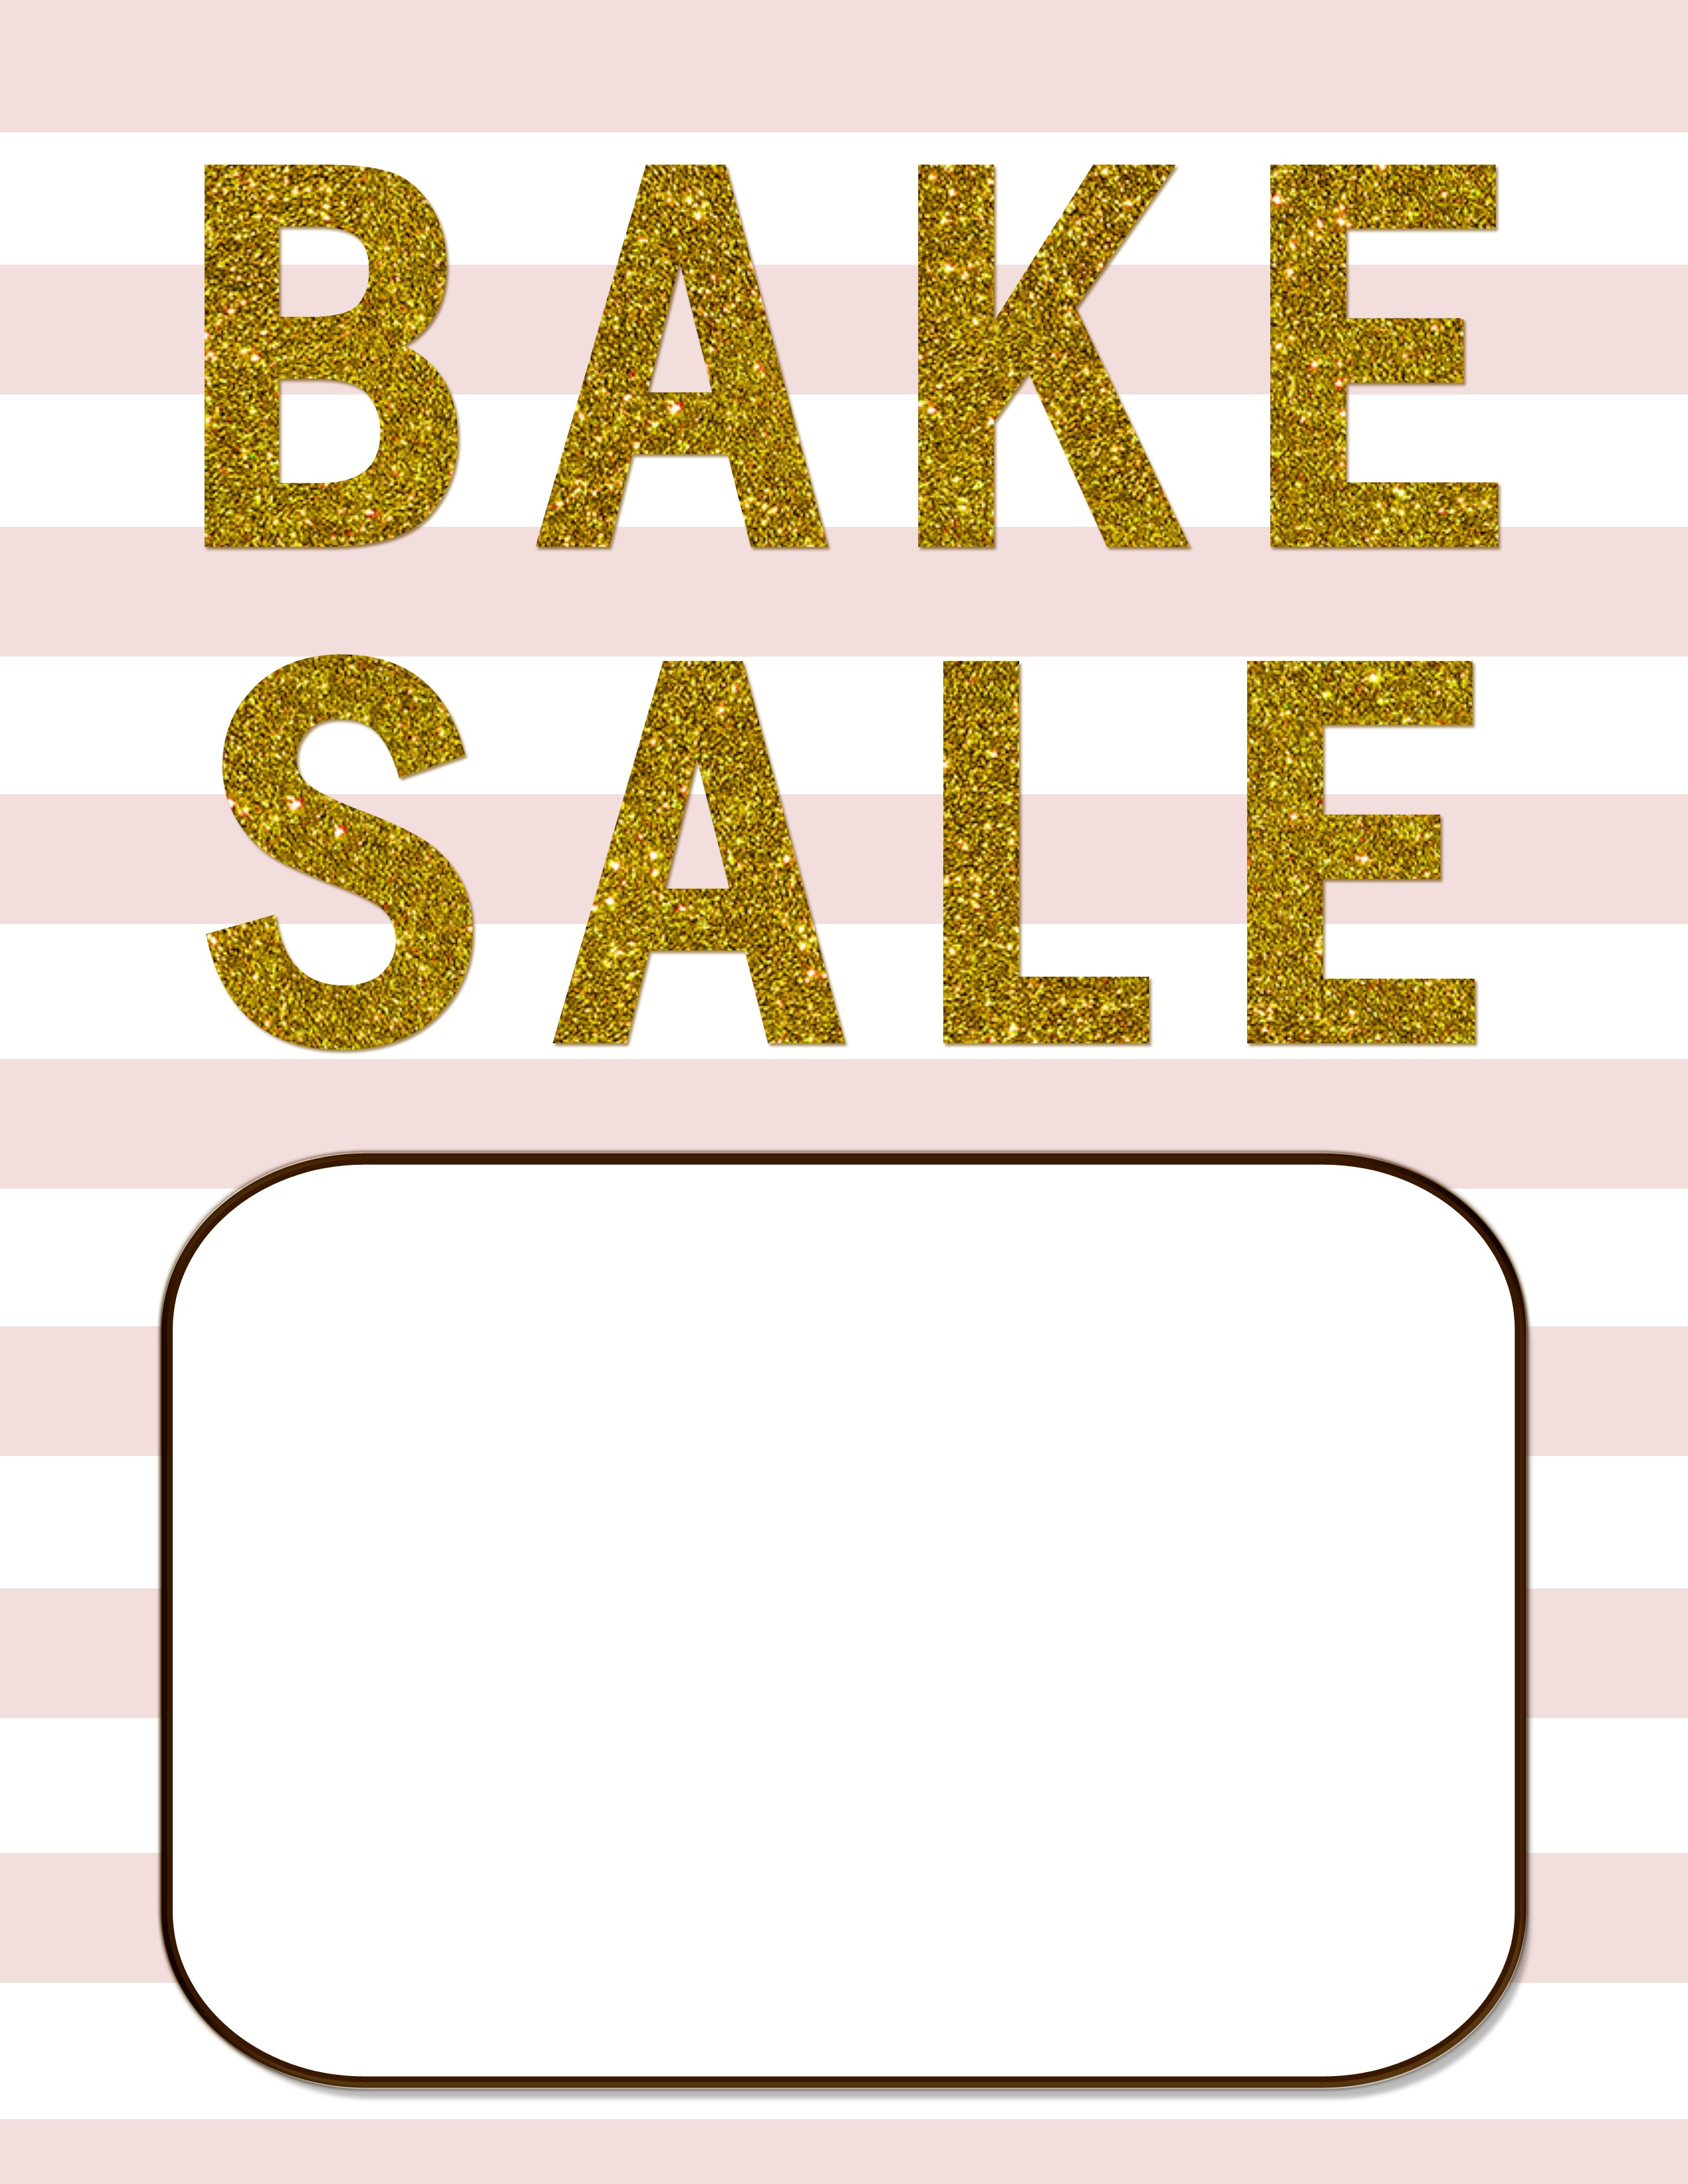 Bake Sale Flyers – Free Flyer Designs - Create Free Printable Flyer